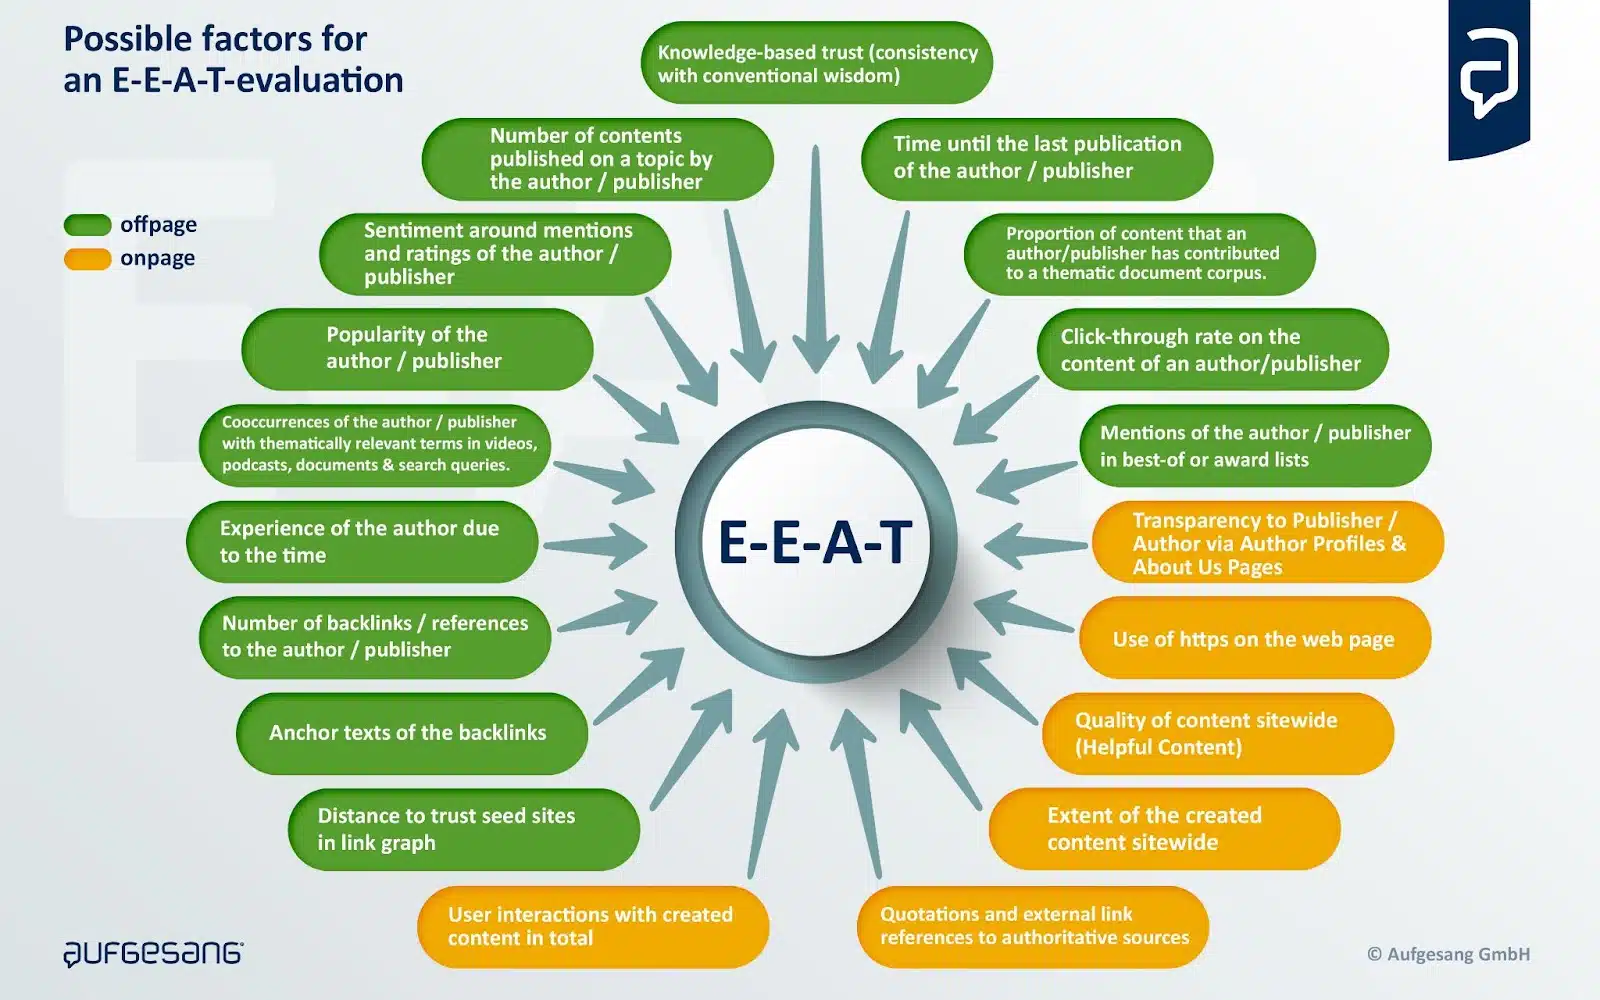 Possible factors for E-E-A-T evaluation